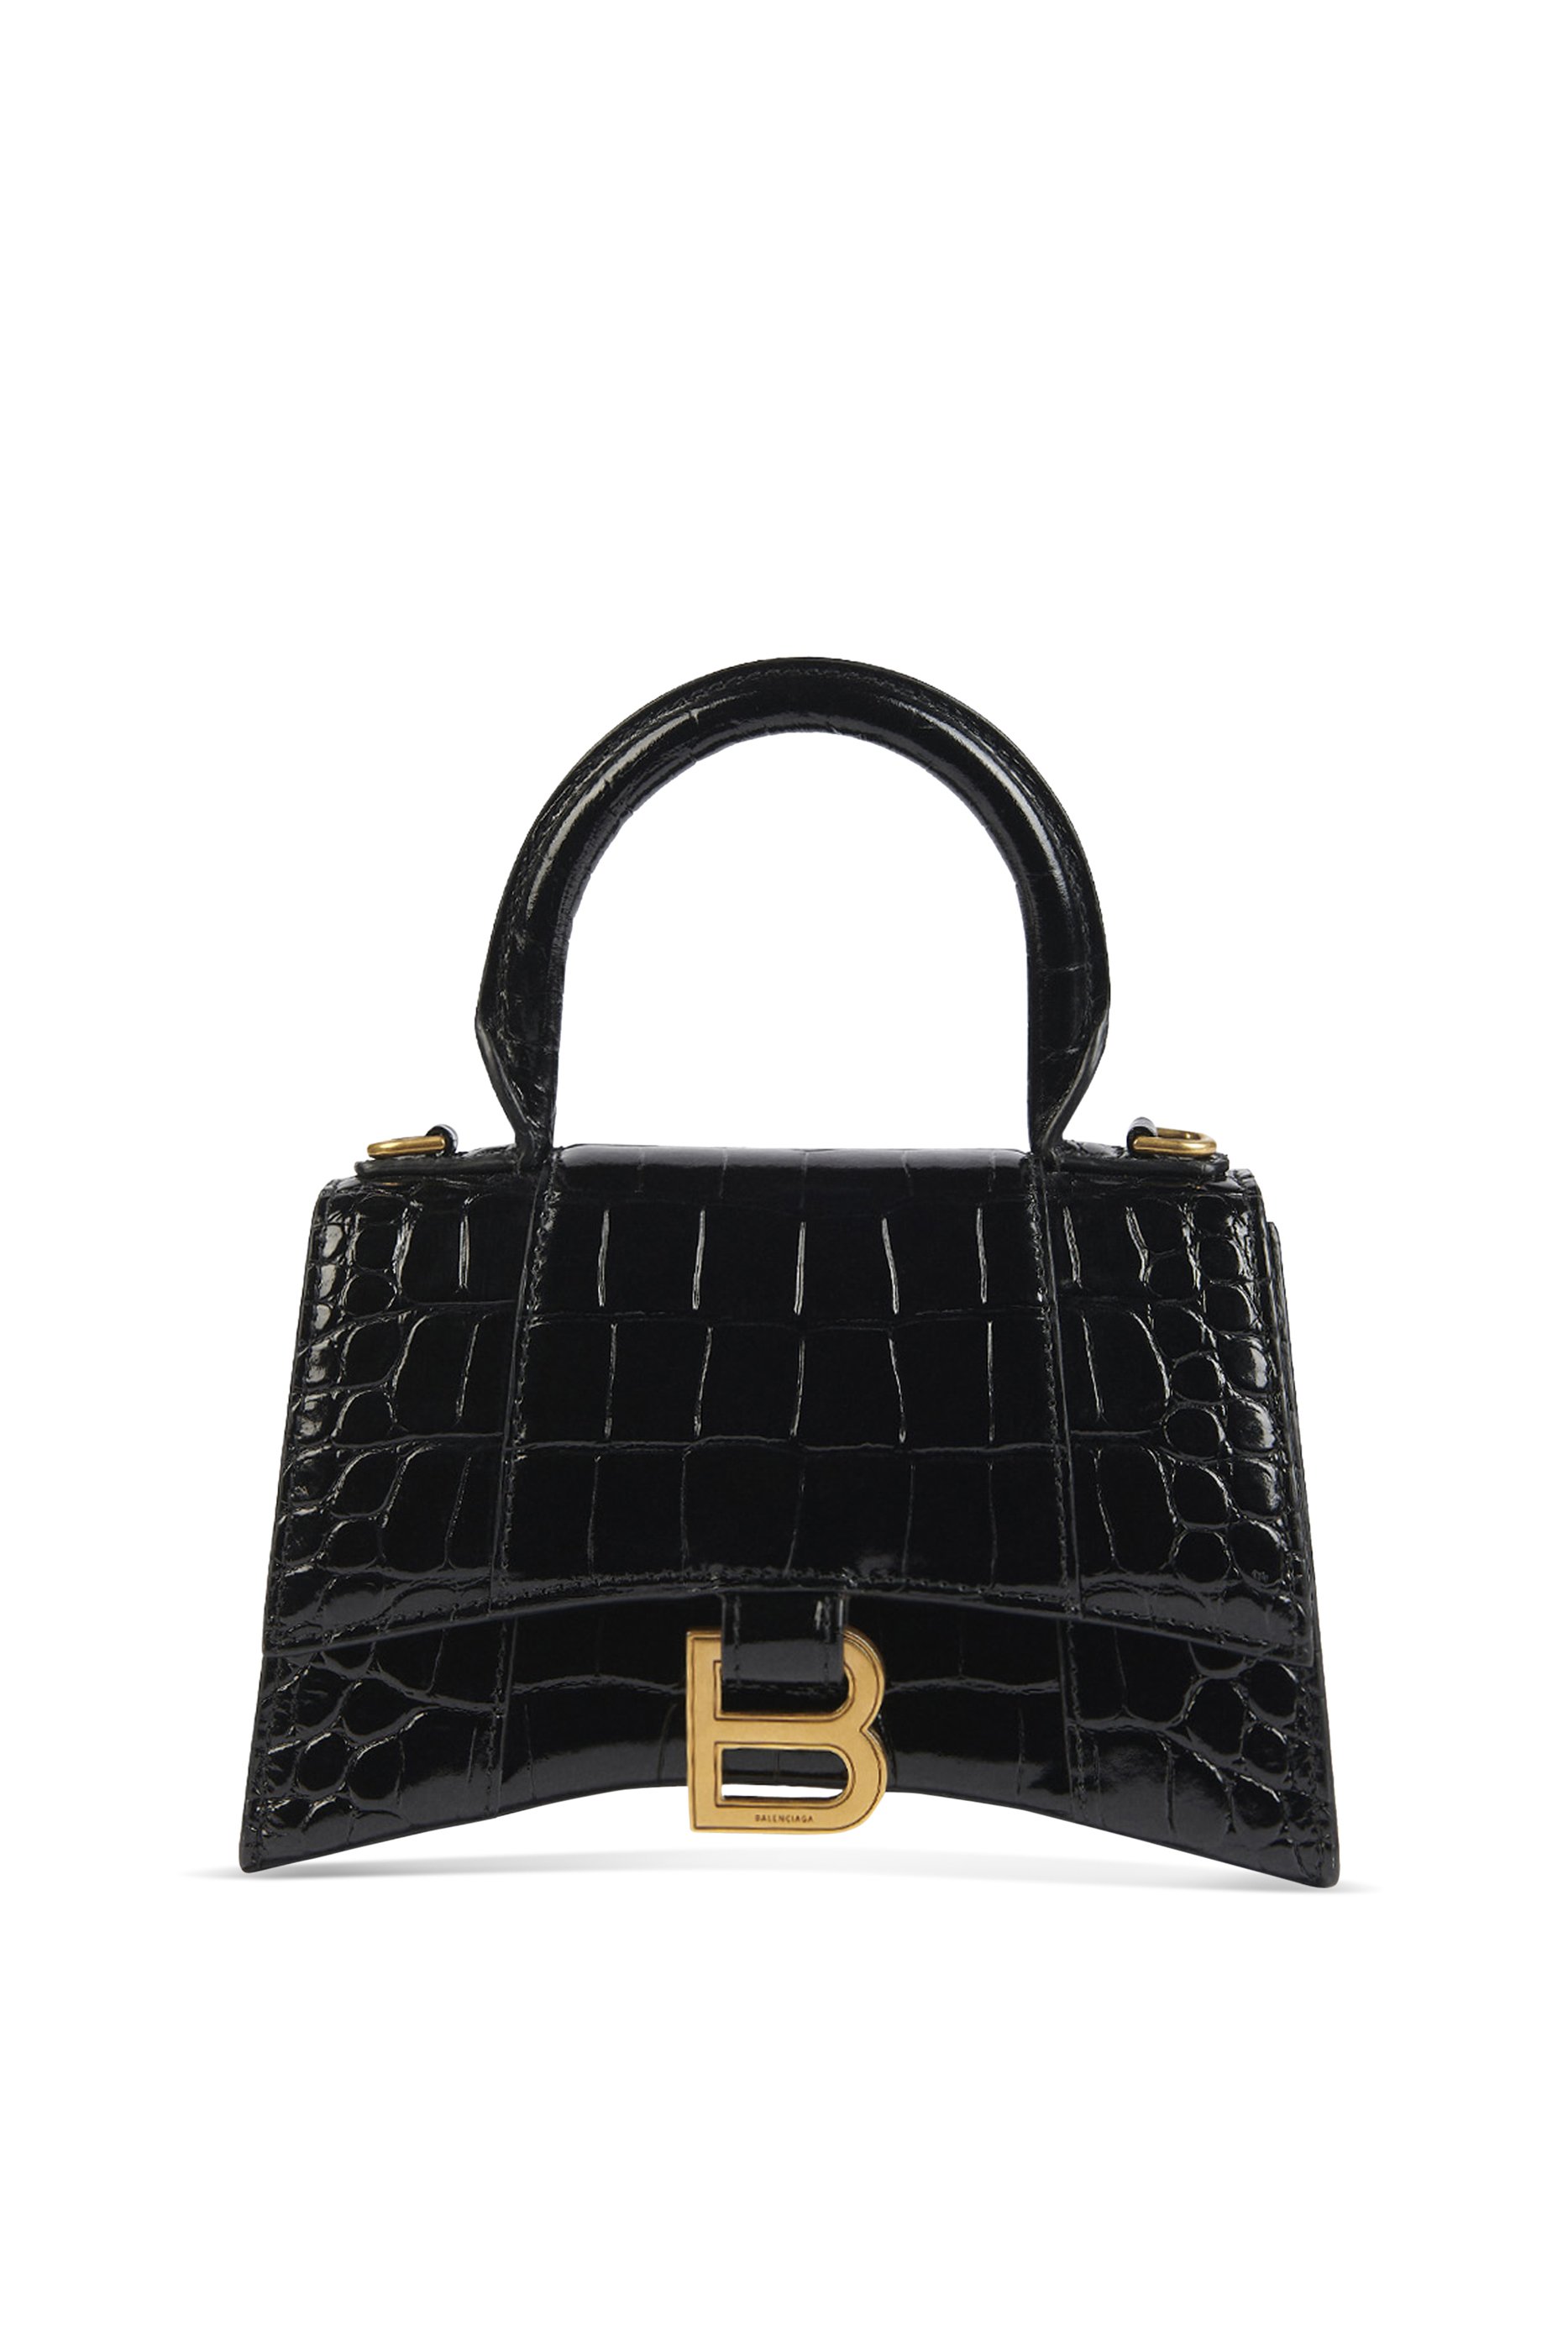 Buy Balenciaga Hourglass XS Top Handle Bag for Womens | Bloomingdale's ...